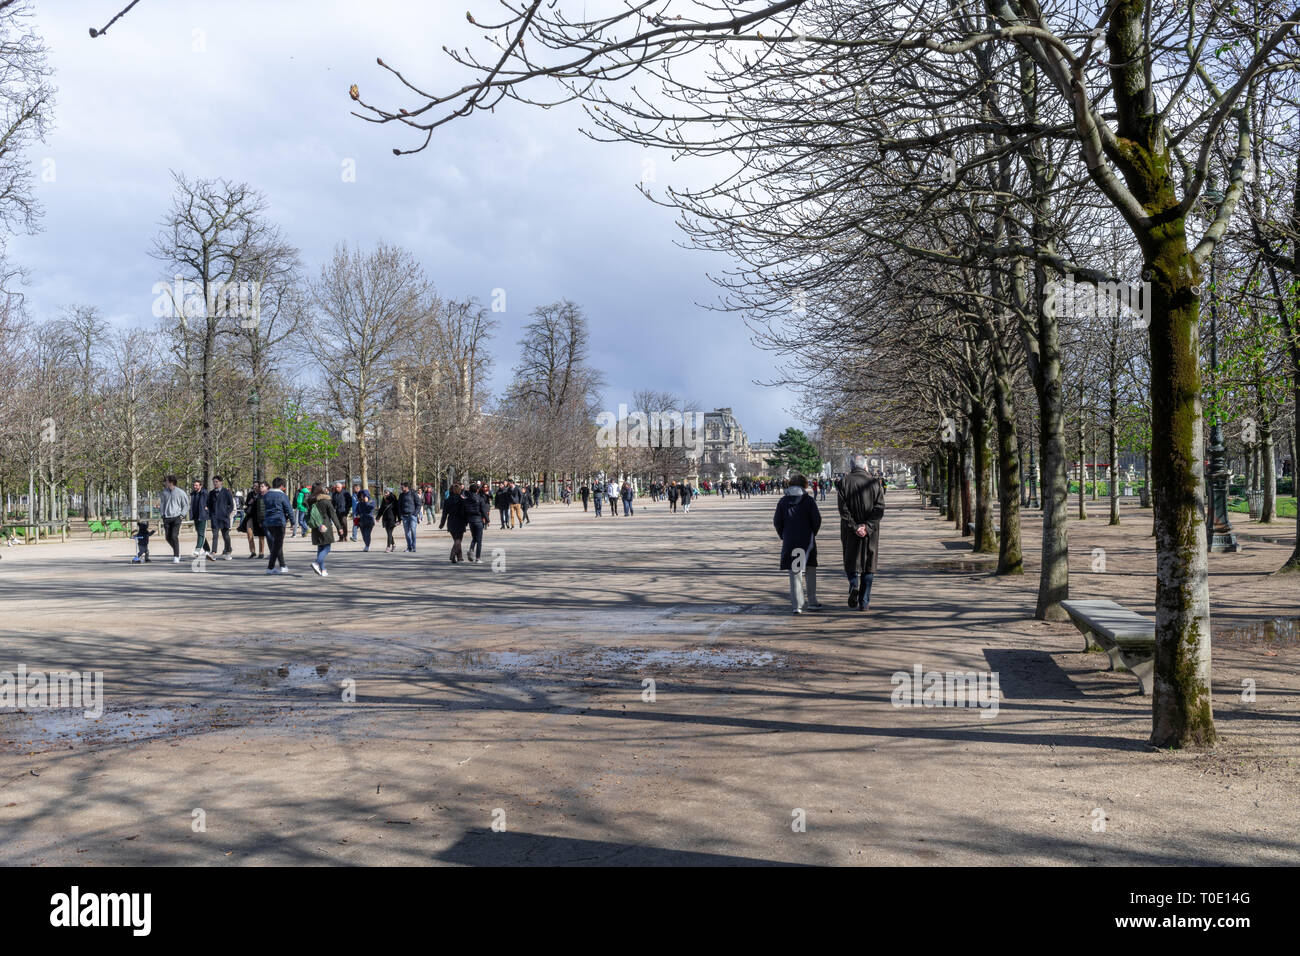 Tuileries garden in Paris Stock Photo